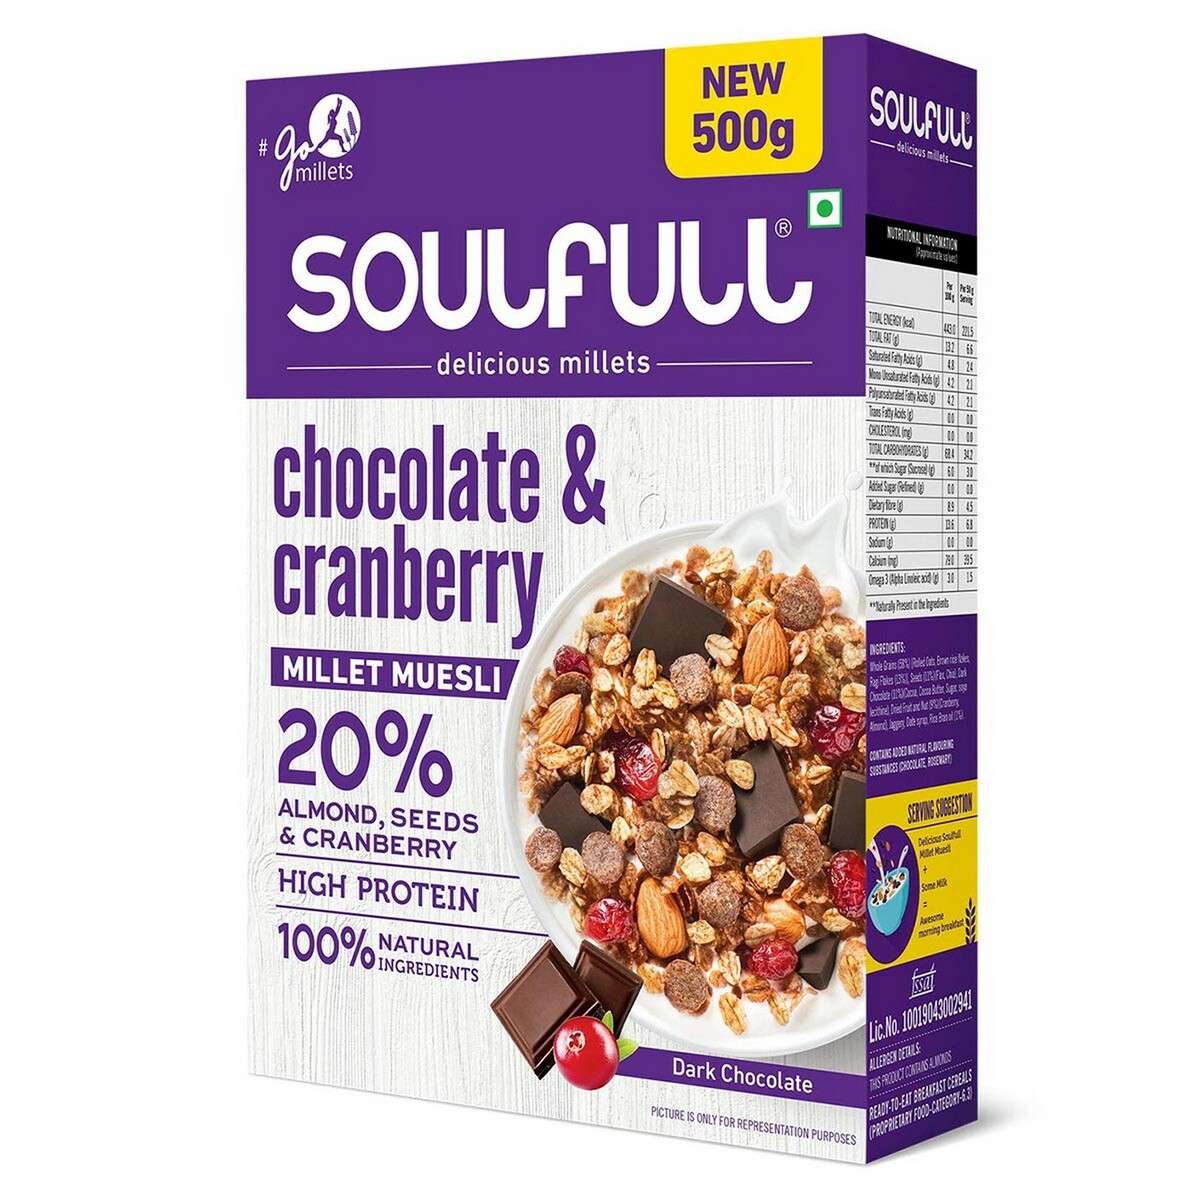 Soulfull Millet Muesli Chocolate & Cranberry 500g